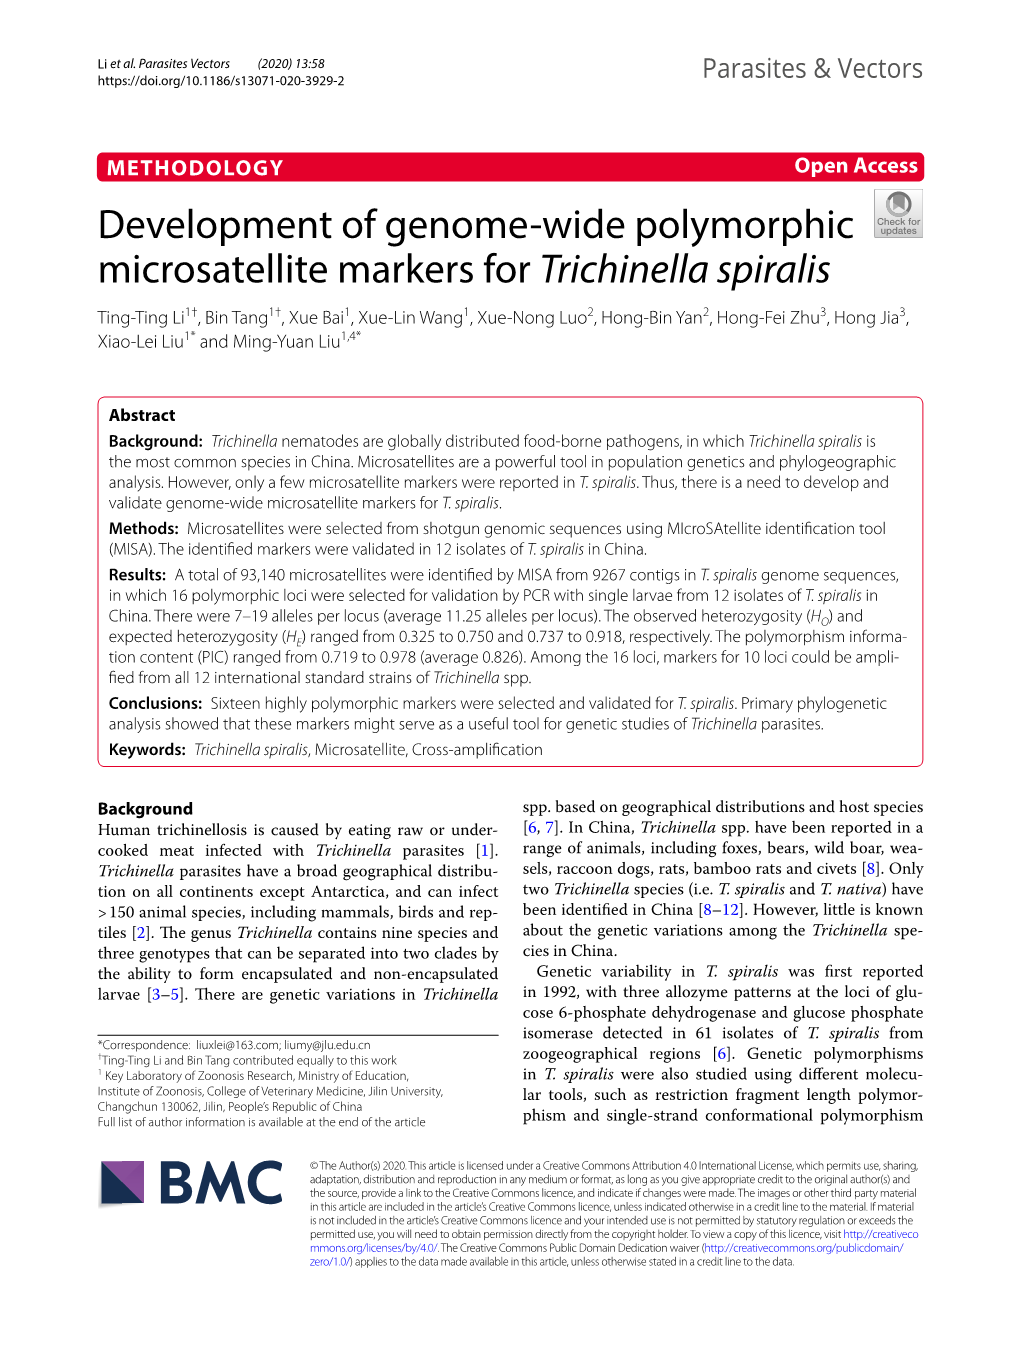 Development of Genome-Wide Polymorphic Microsatellite Markers